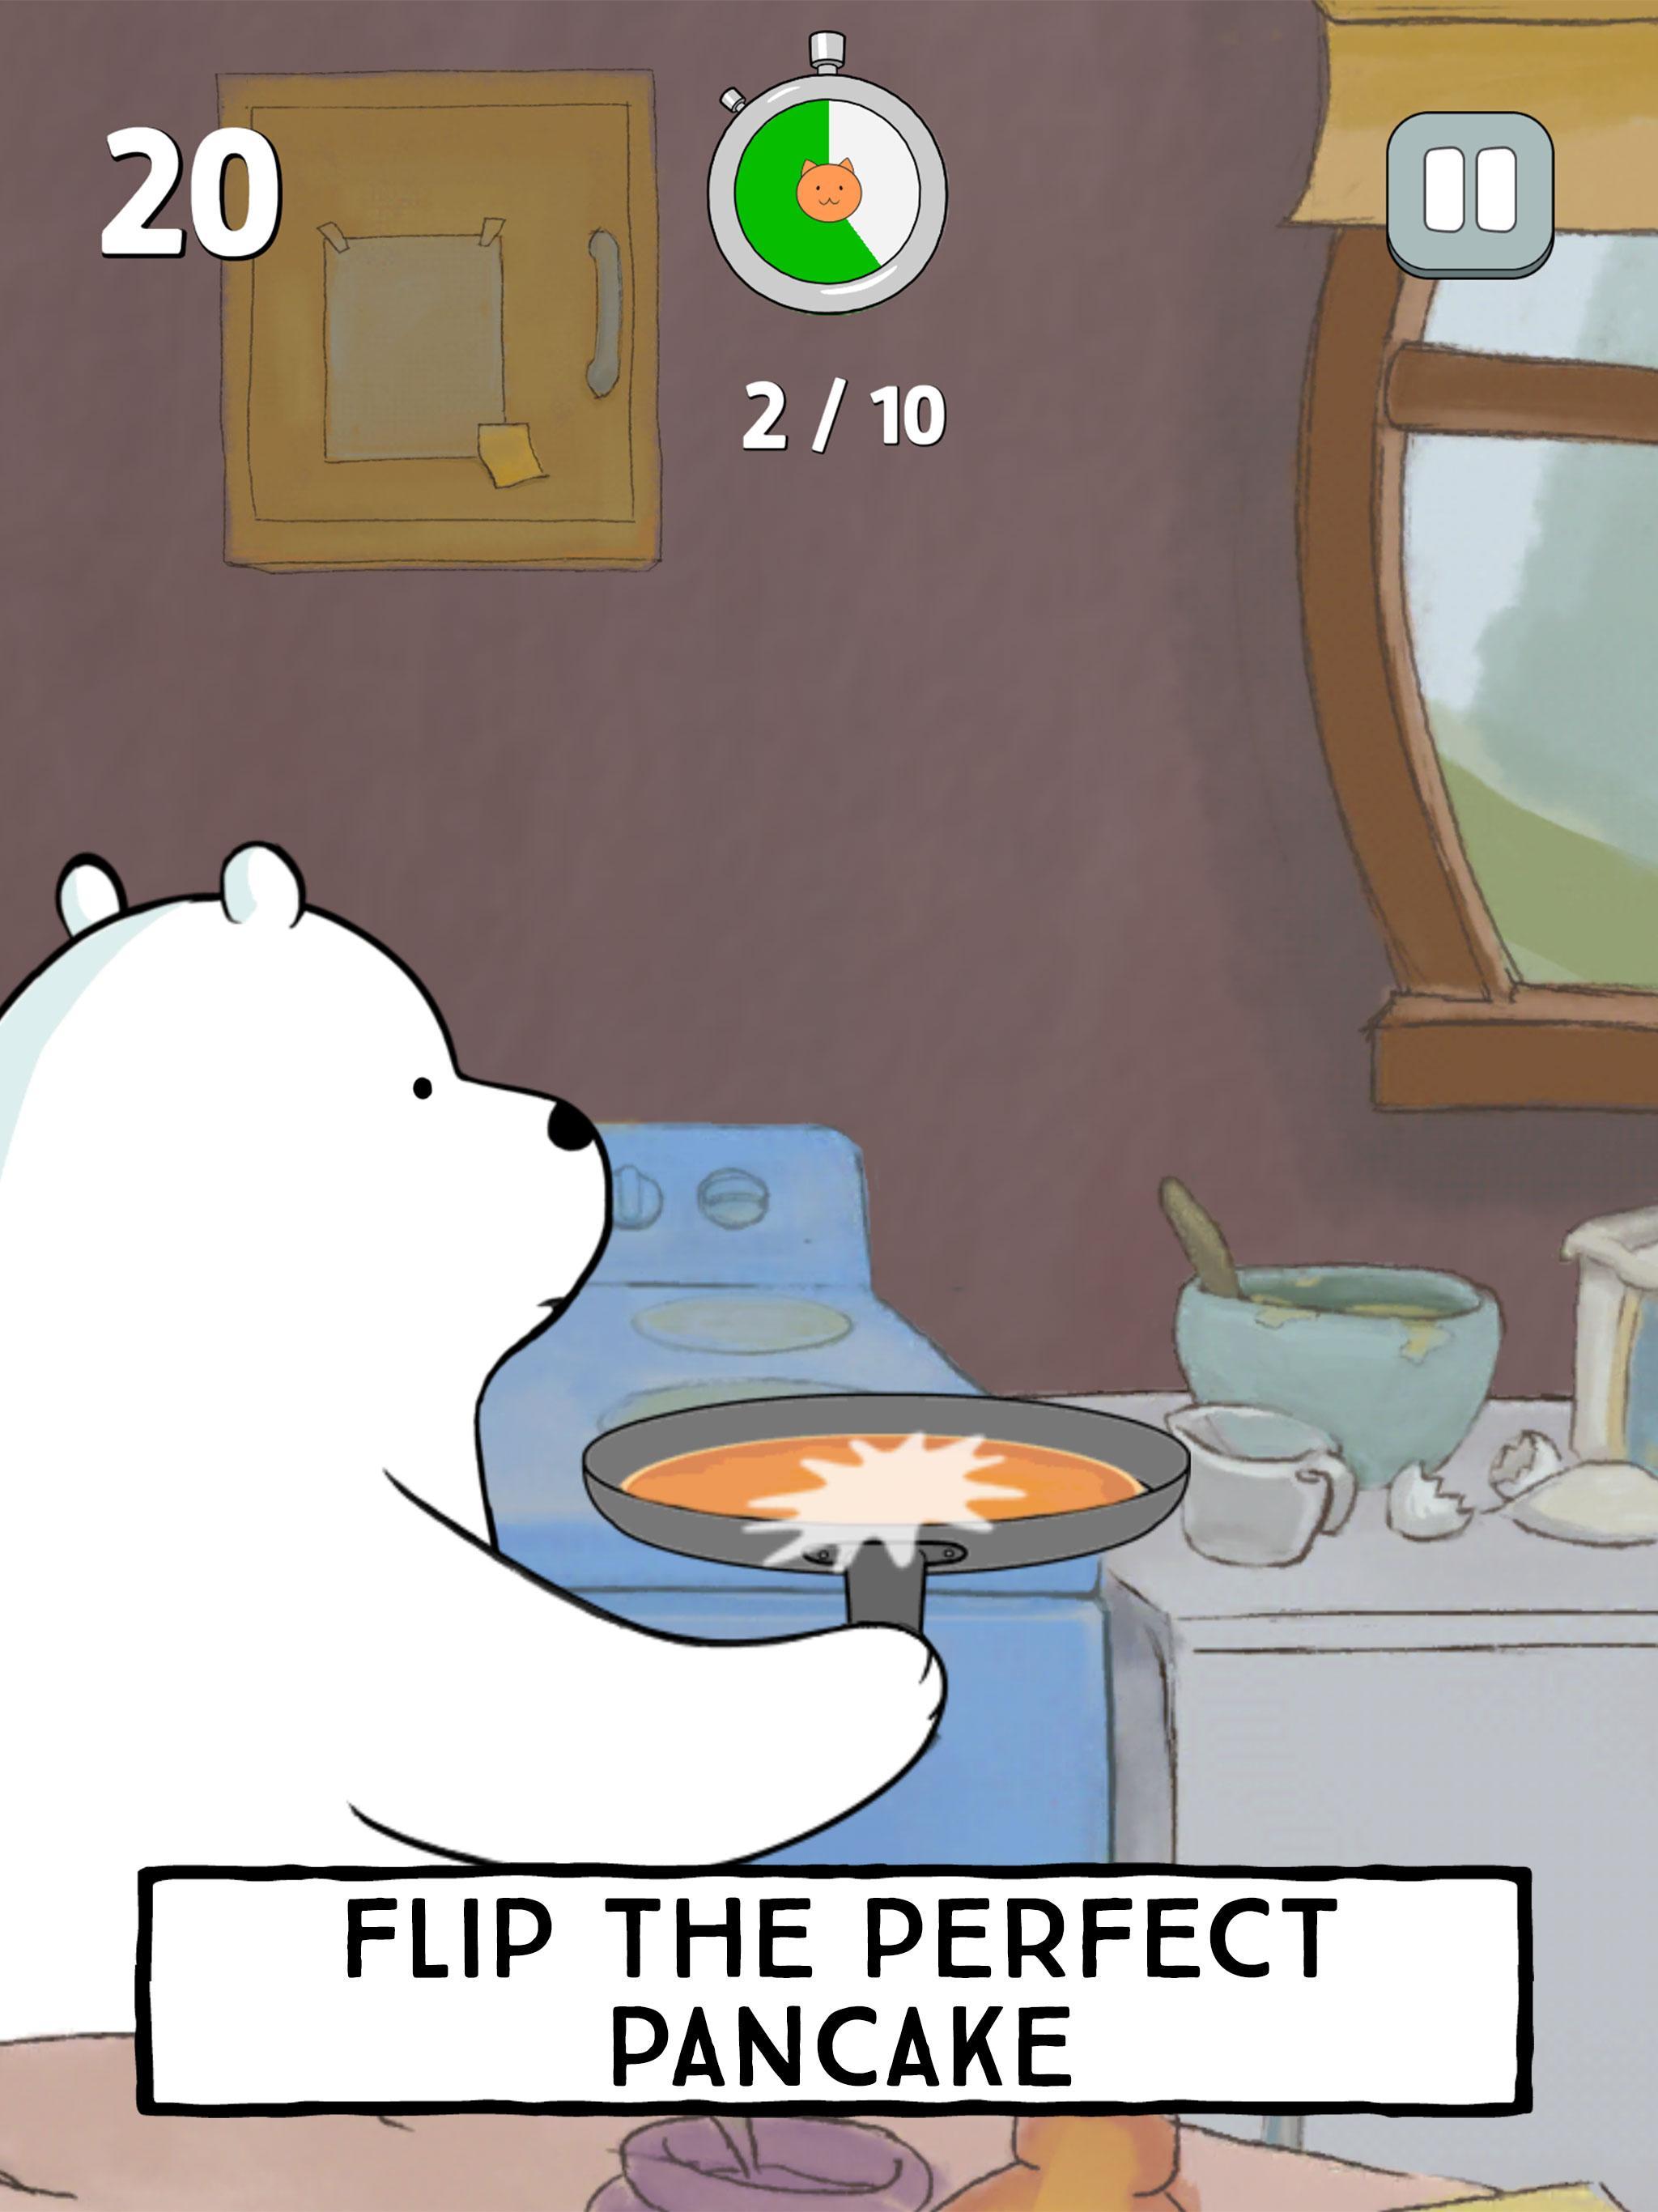 We Bare Bears - Free Fur All: Mini Game Arcade 1.0.1 Screenshot 10